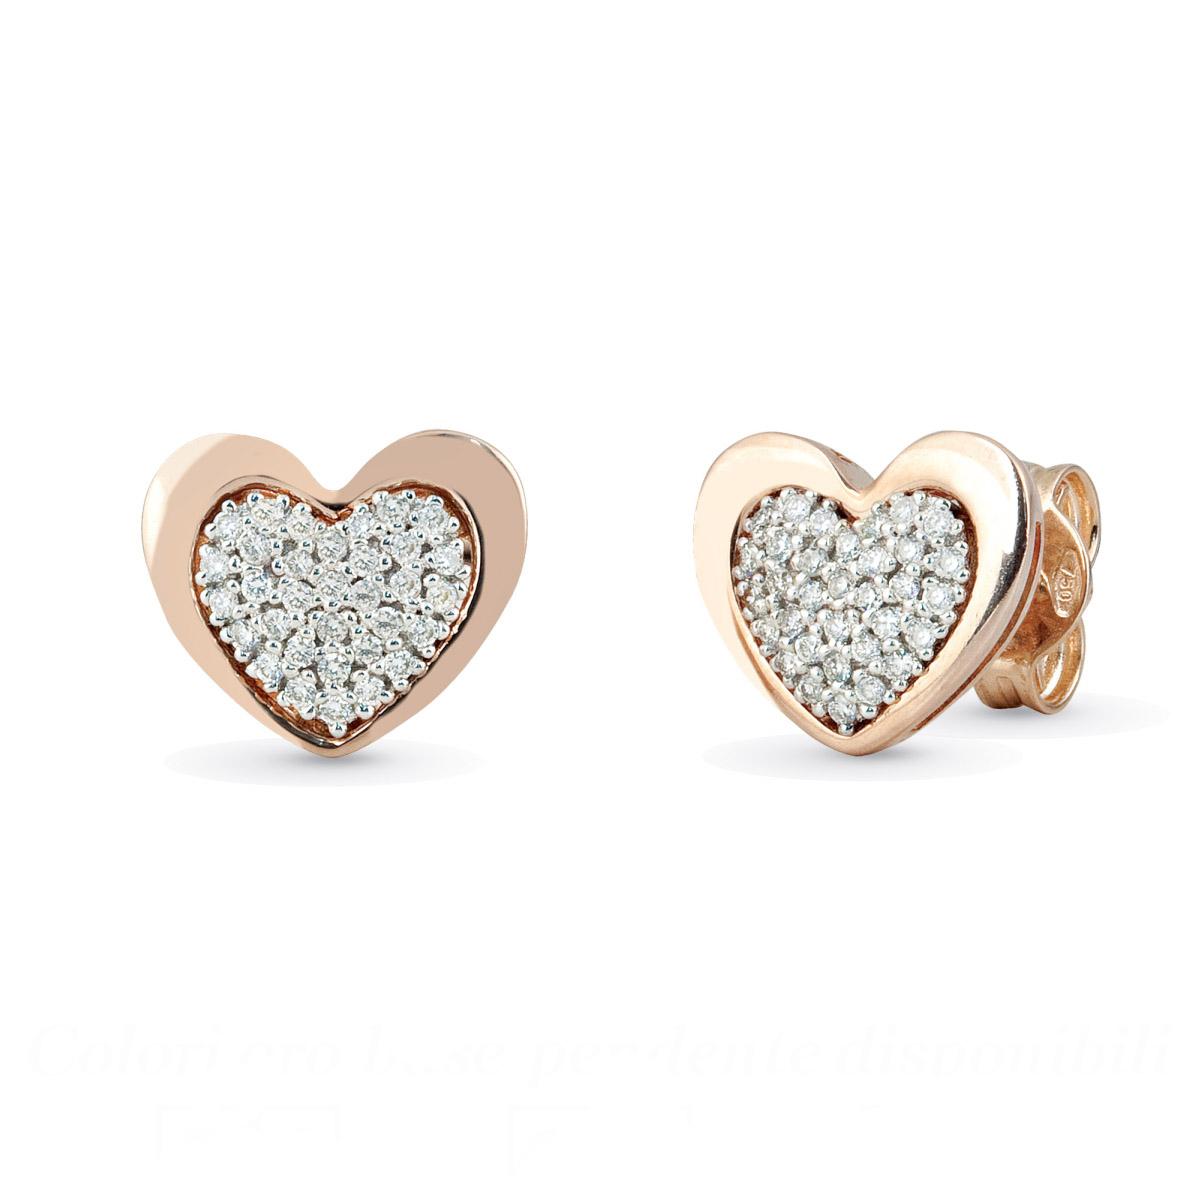 Gold and diamond earrings - OD265